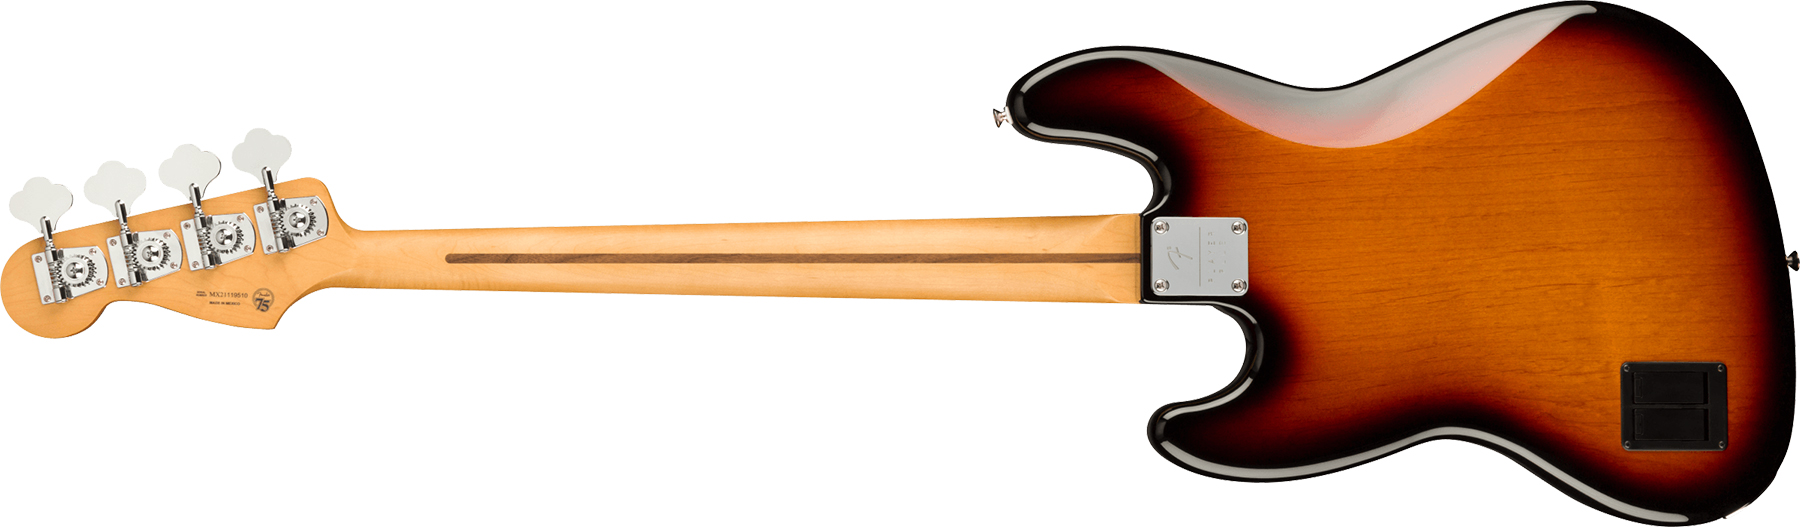 Fender Jazz Bass Player Plus Mex Active Pf - 3-color Sunburst - Bajo eléctrico de cuerpo sólido - Variation 1